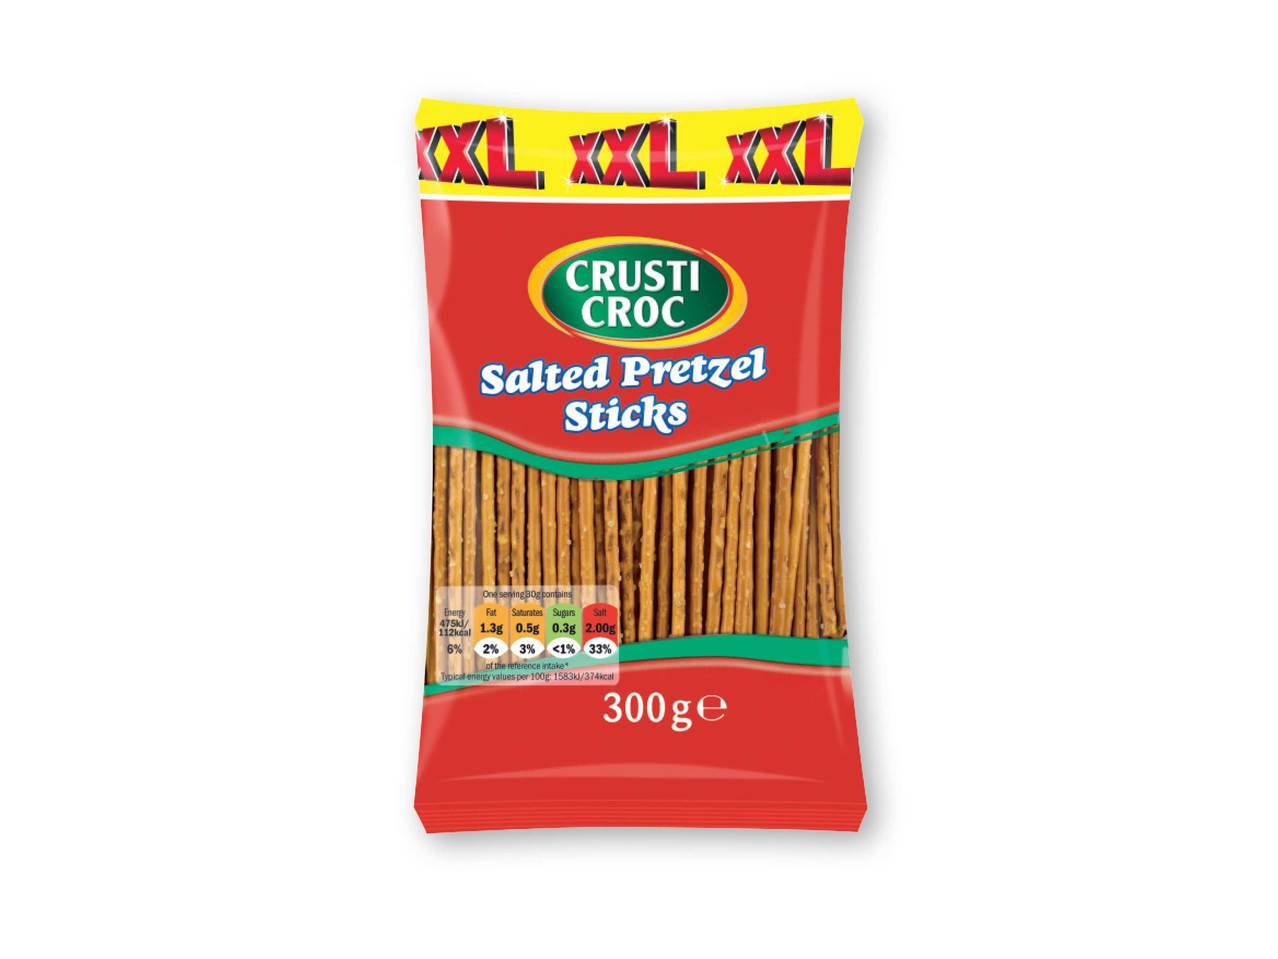 CRUSTI CROC(R) Salted Pretzel Sticks